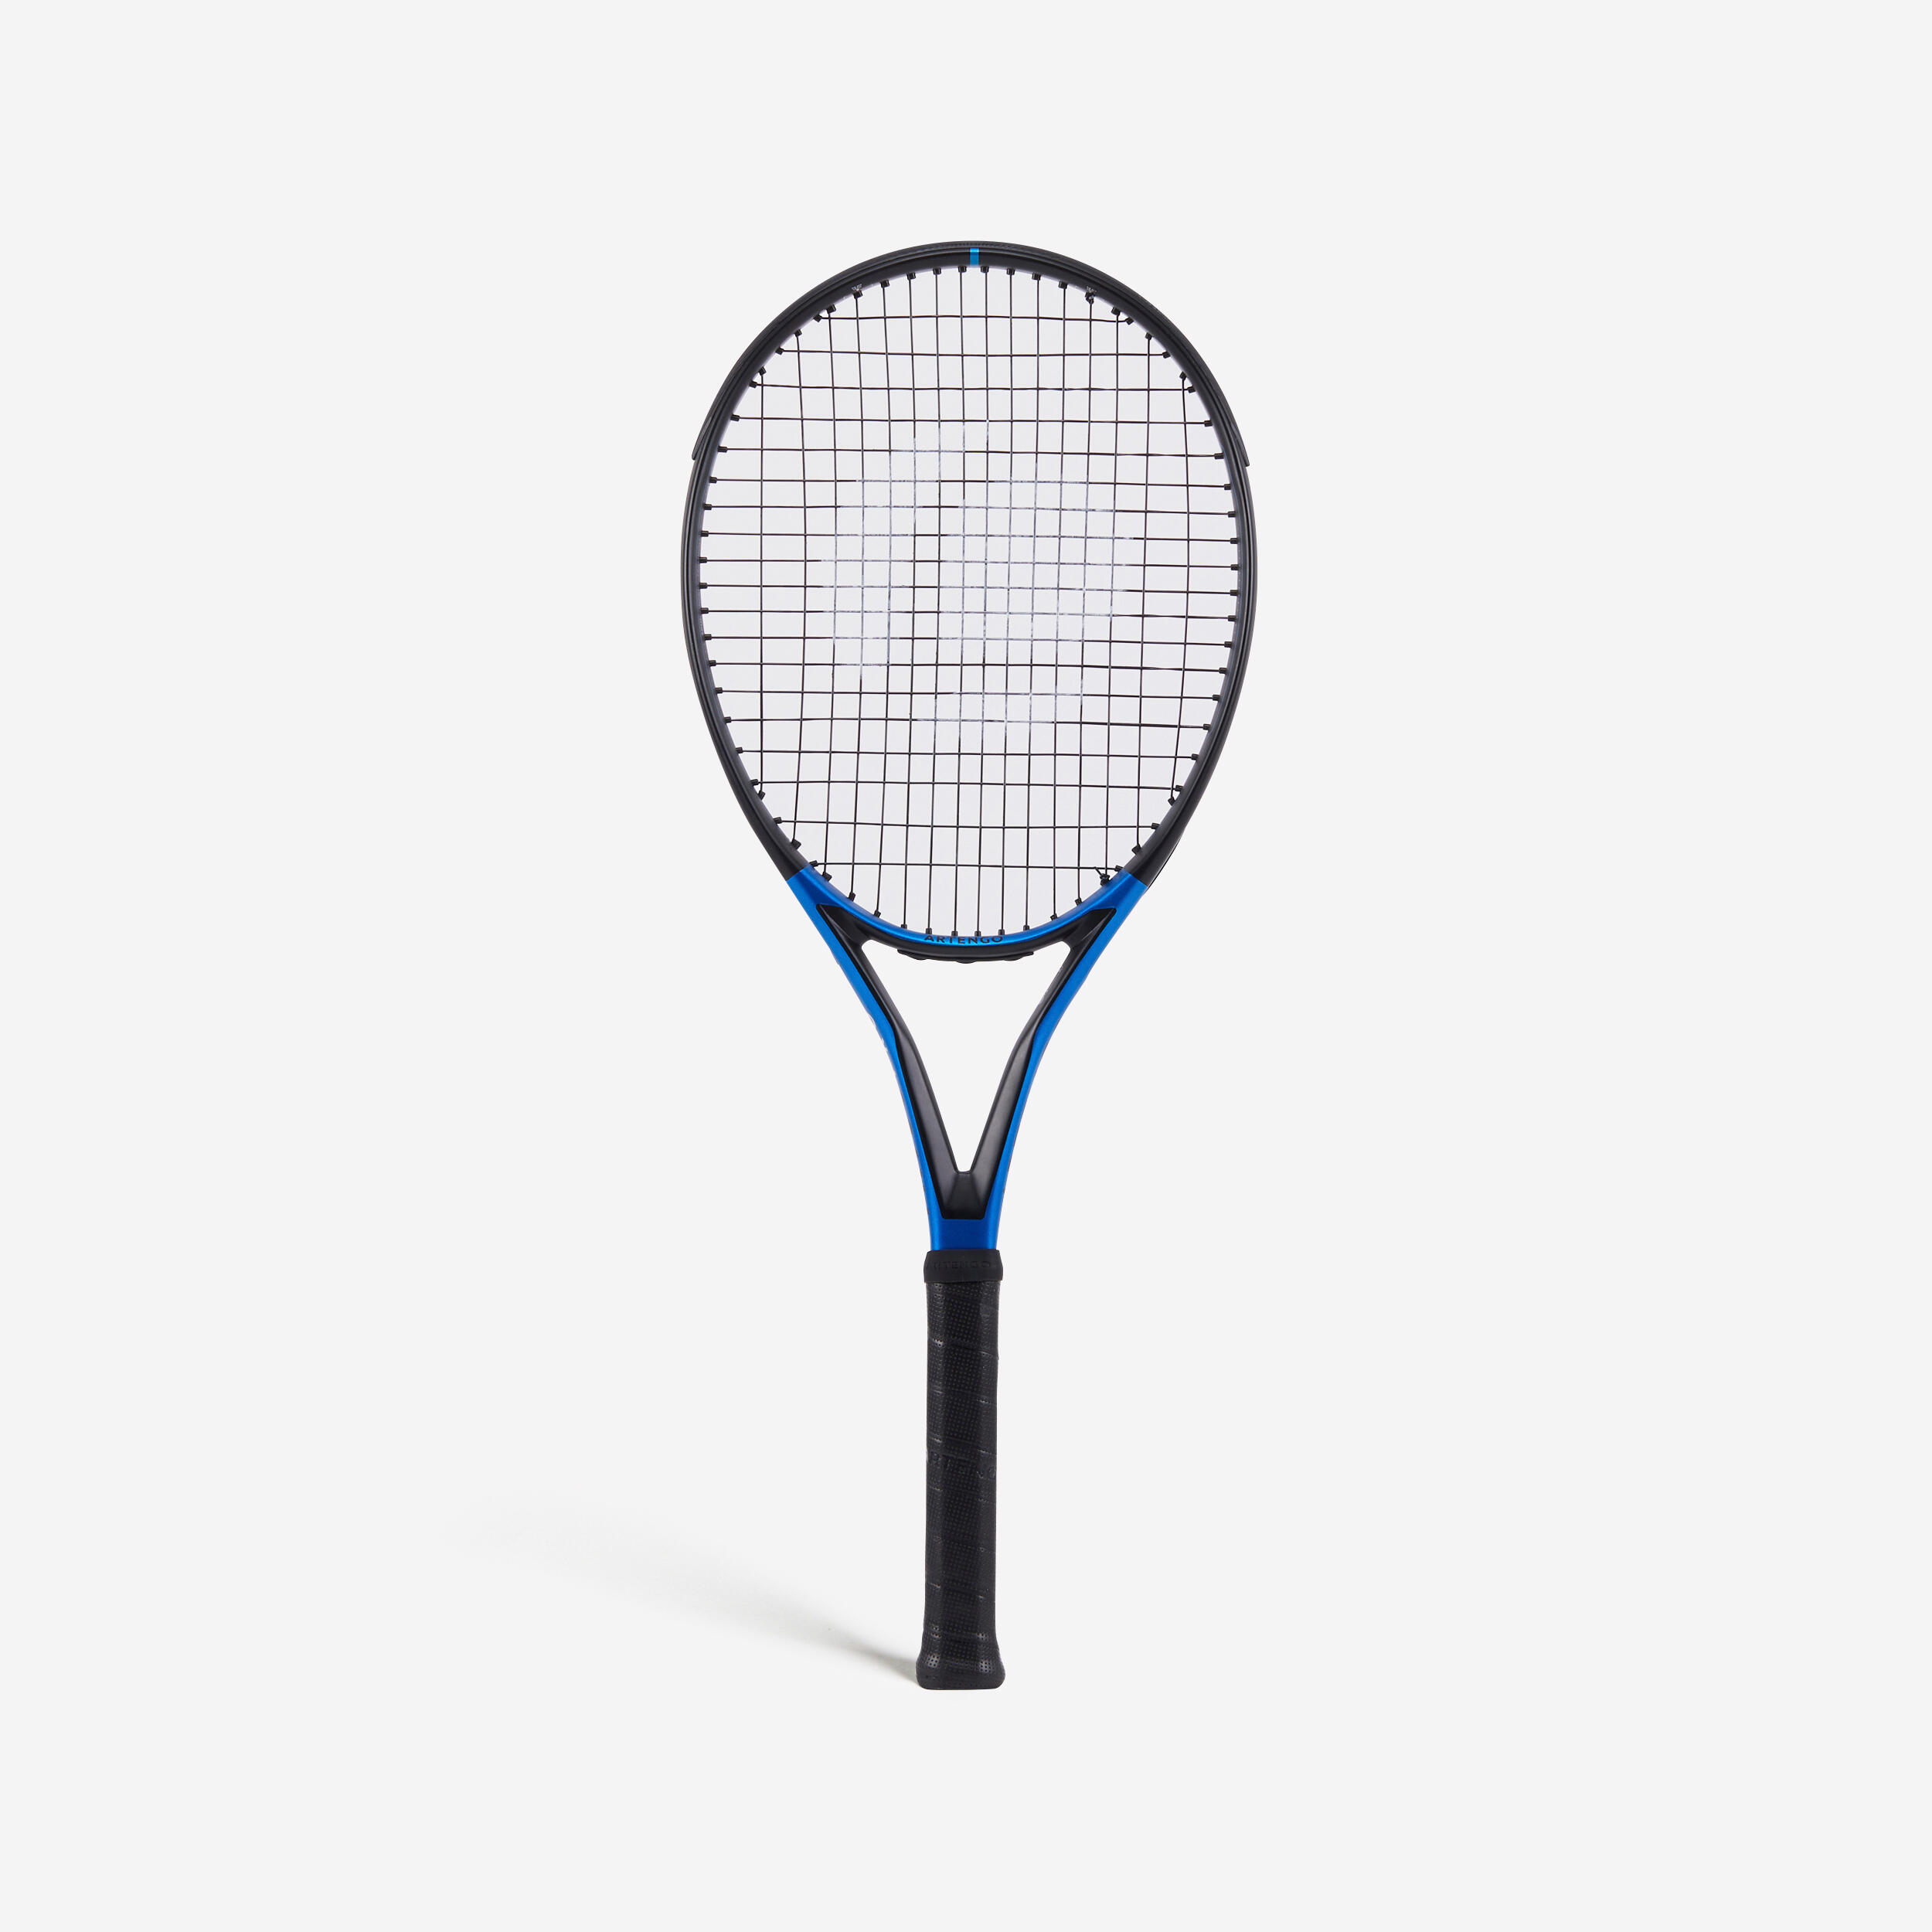 ARTENGO Adult Tennis Racket Spin Pro TR930 300g - Black/Blue